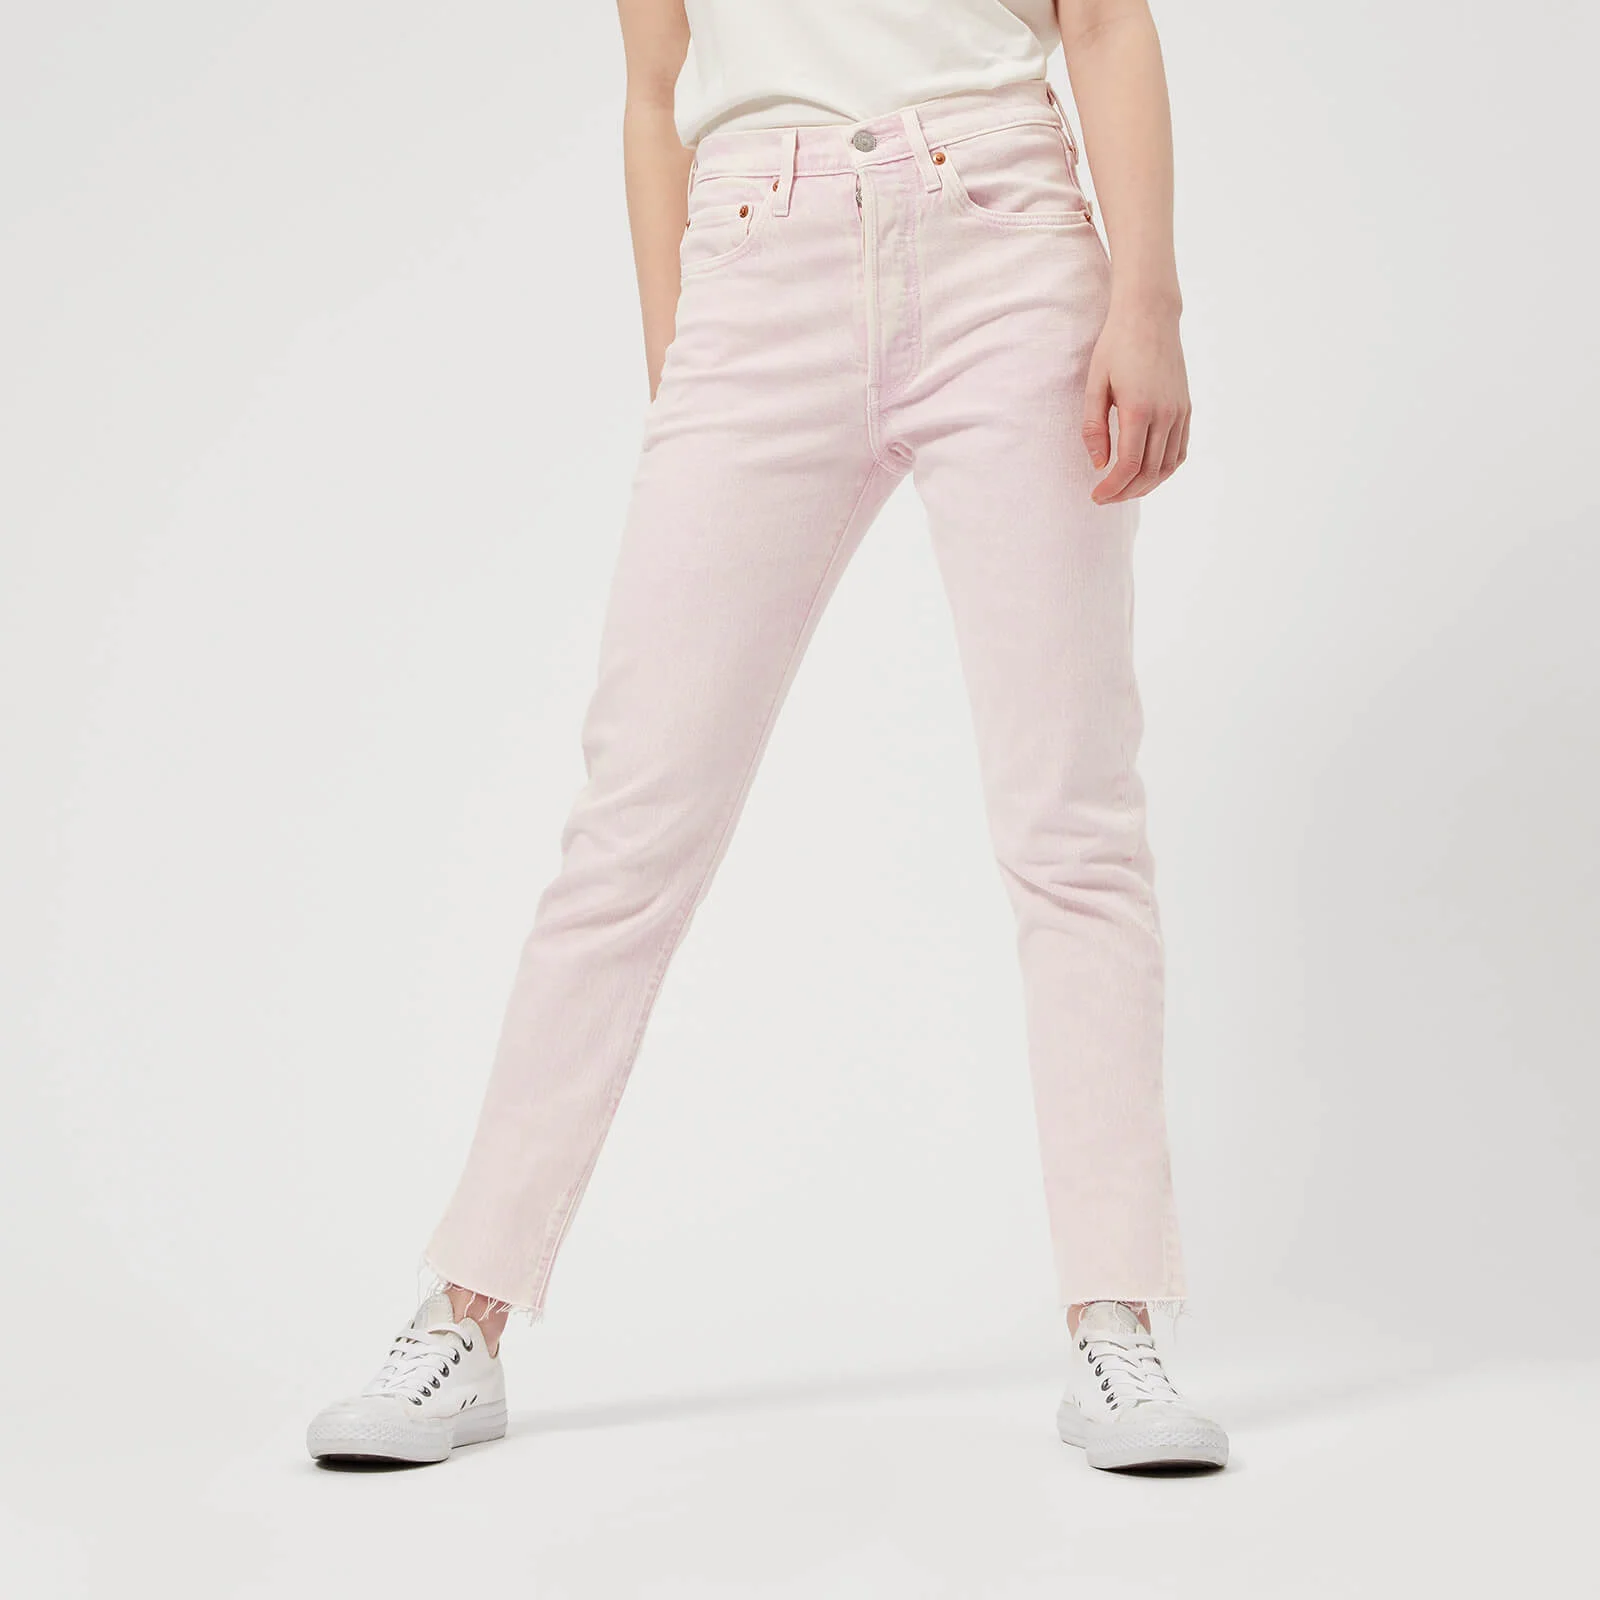 Levi's Women's 501 Skinny Jeans - Acid Light Lilac Image 1